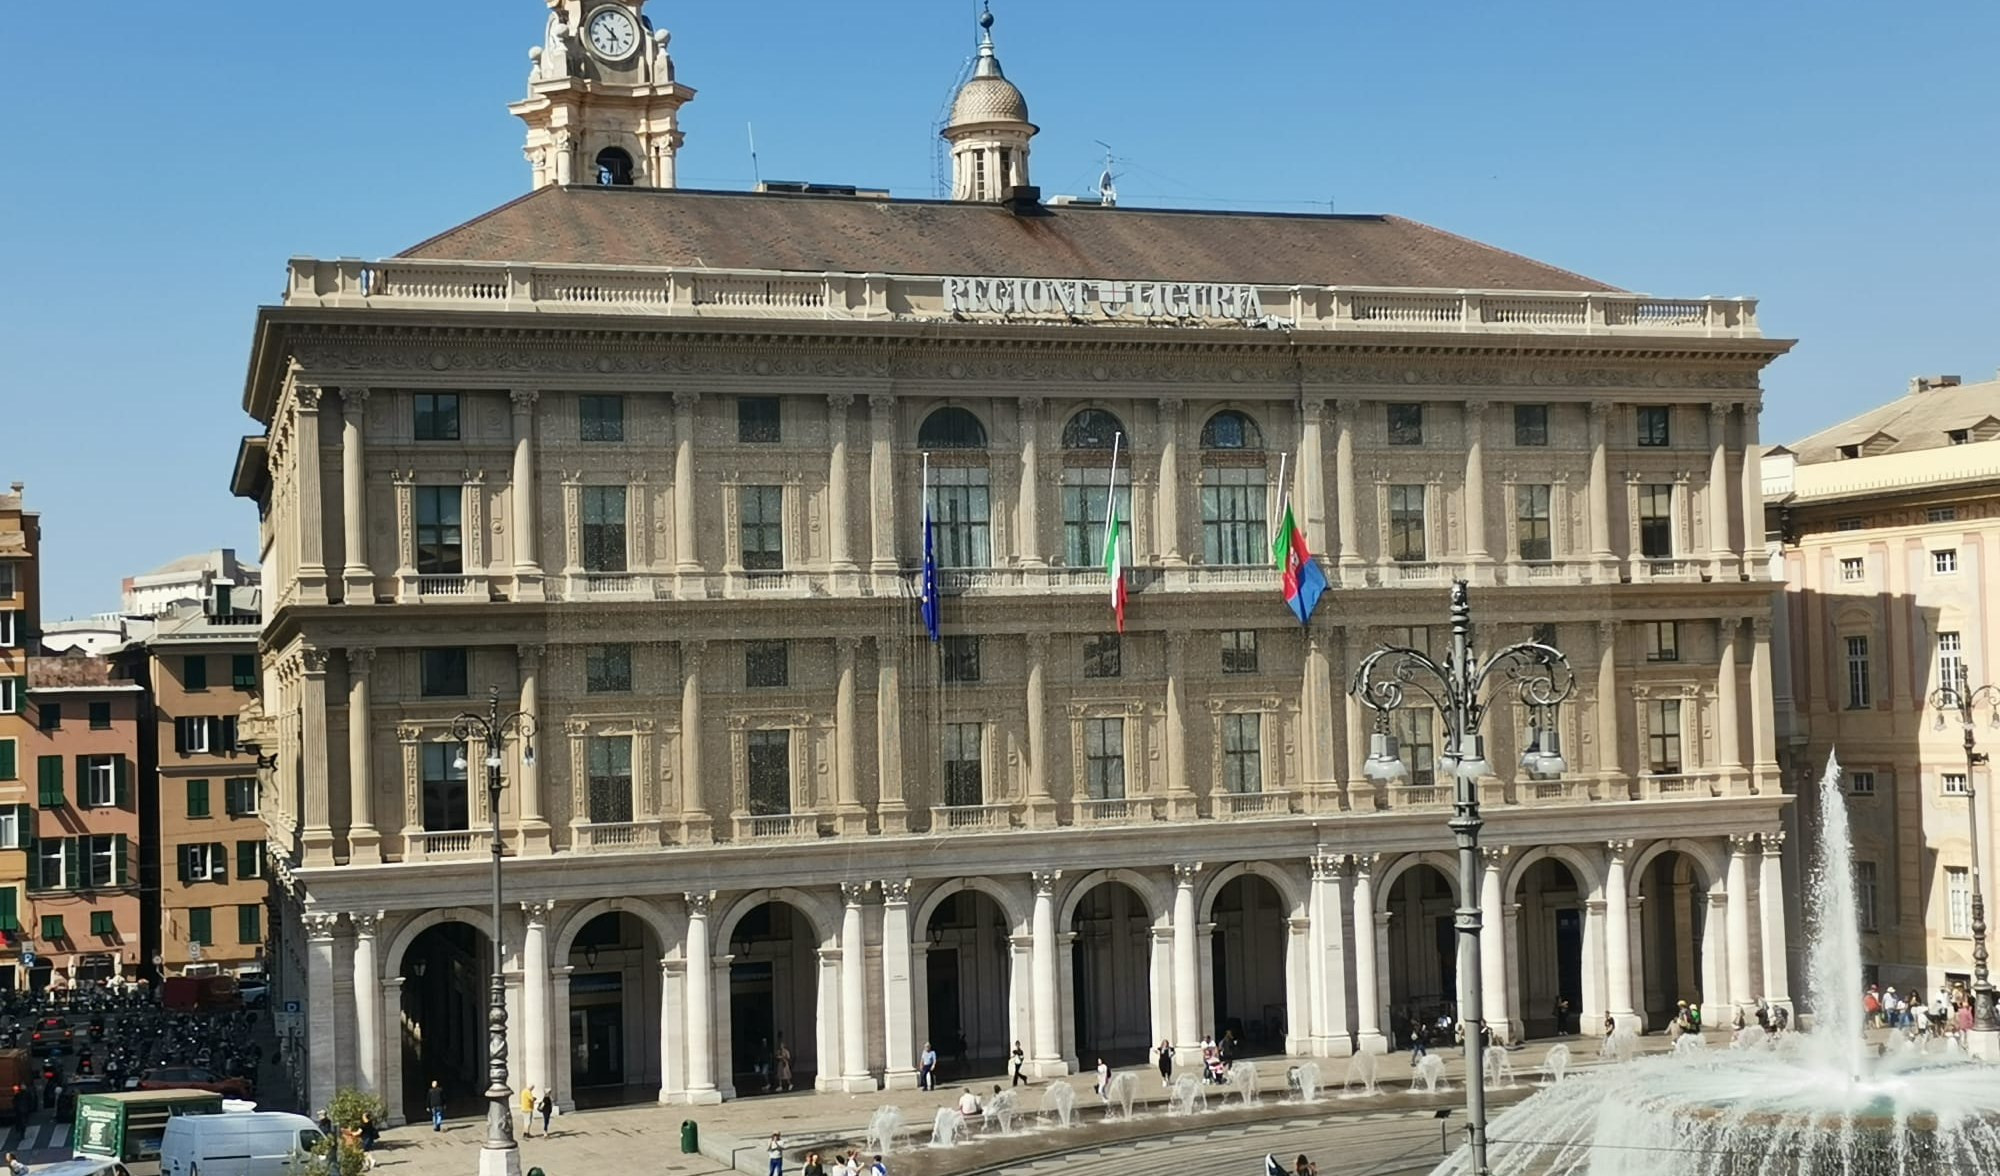 Lutto nazionale per l'Emilia Romagna, bandiere a mezz'asta a De Ferrari